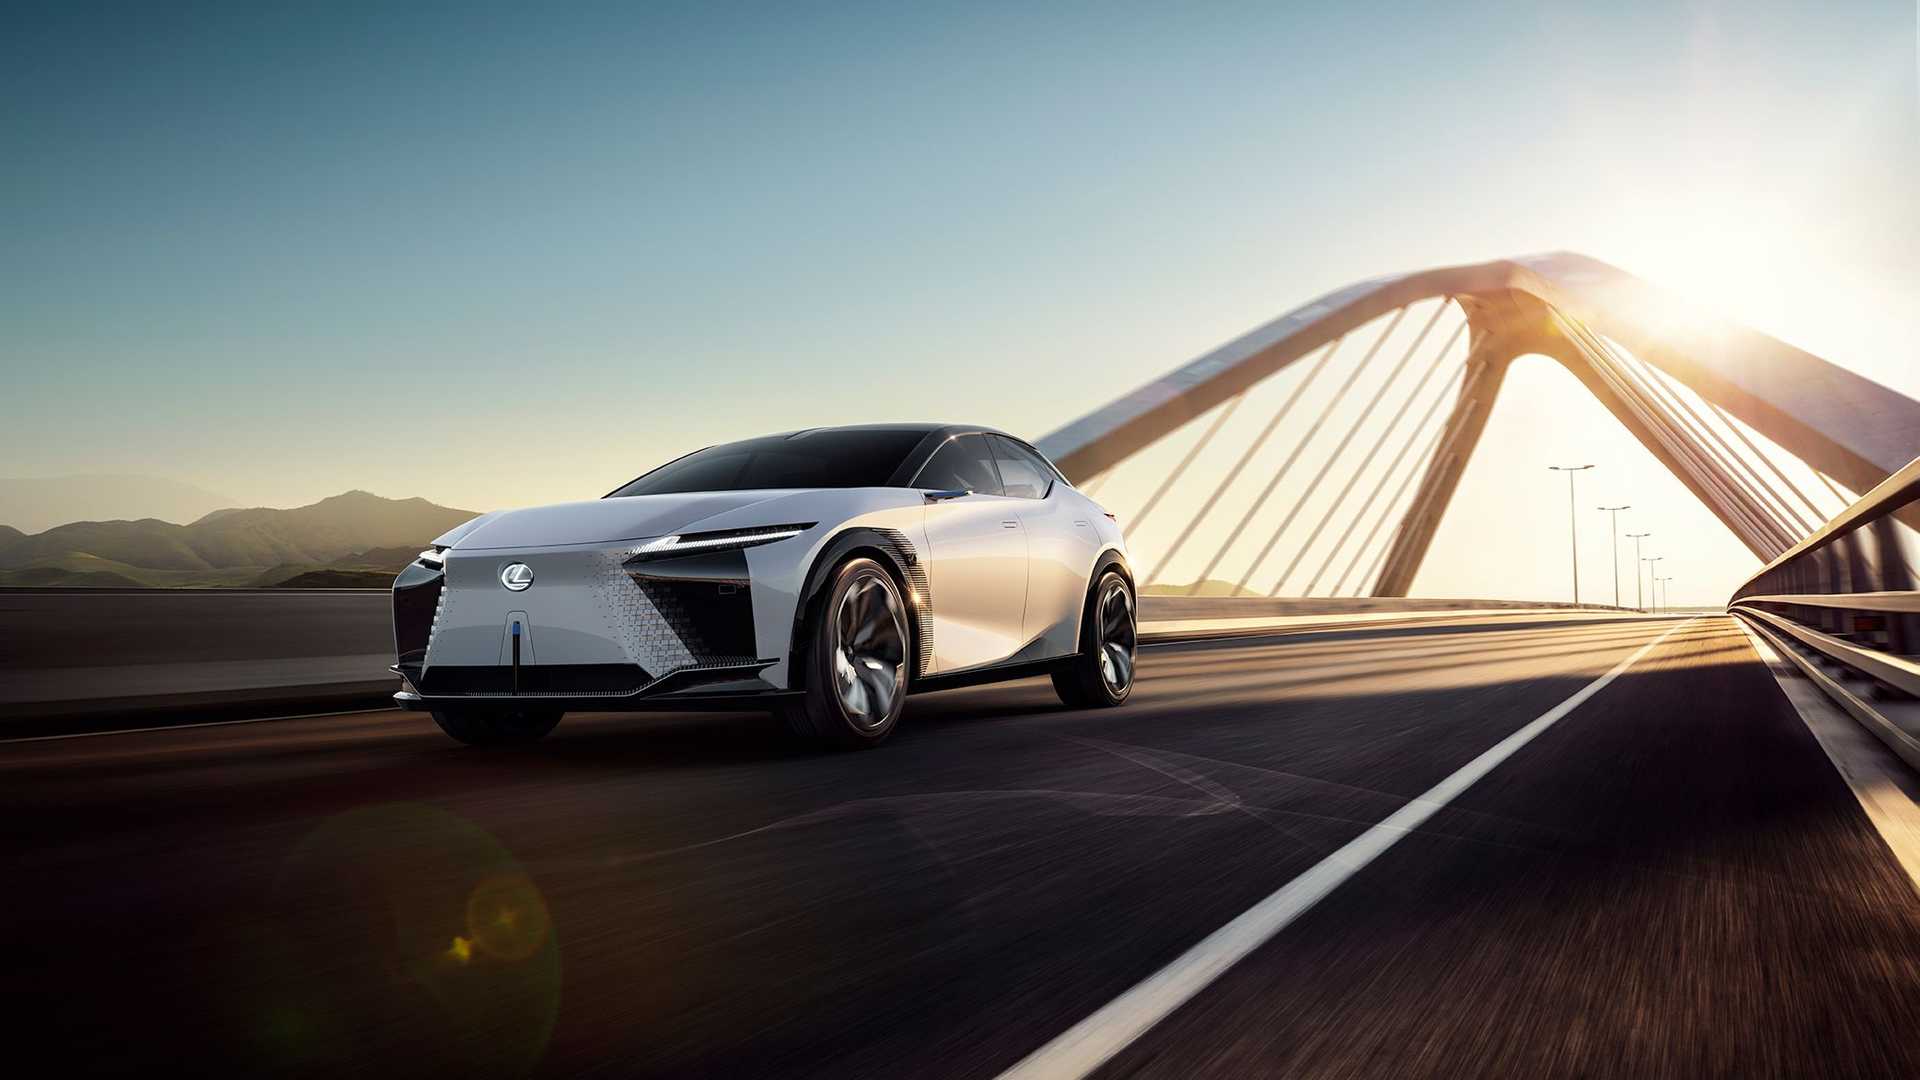 خودروی مفهومی و برقی لکسوس / Lexus LF-Z Electrified Concept EV سفید رنگ با منظره پل معلق